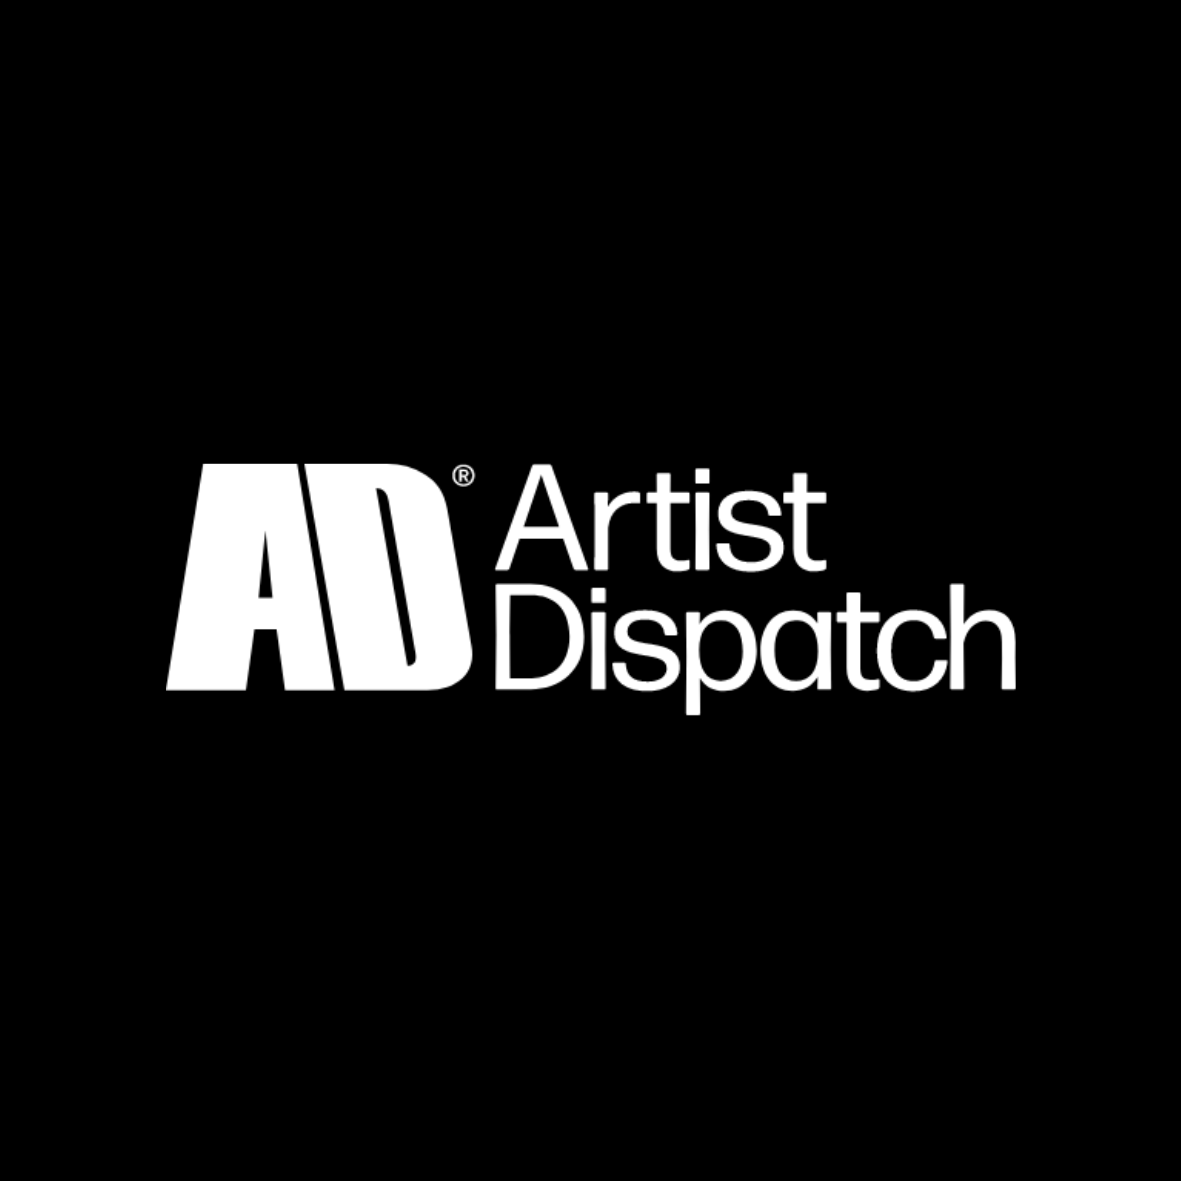 Artist Dispatch logo